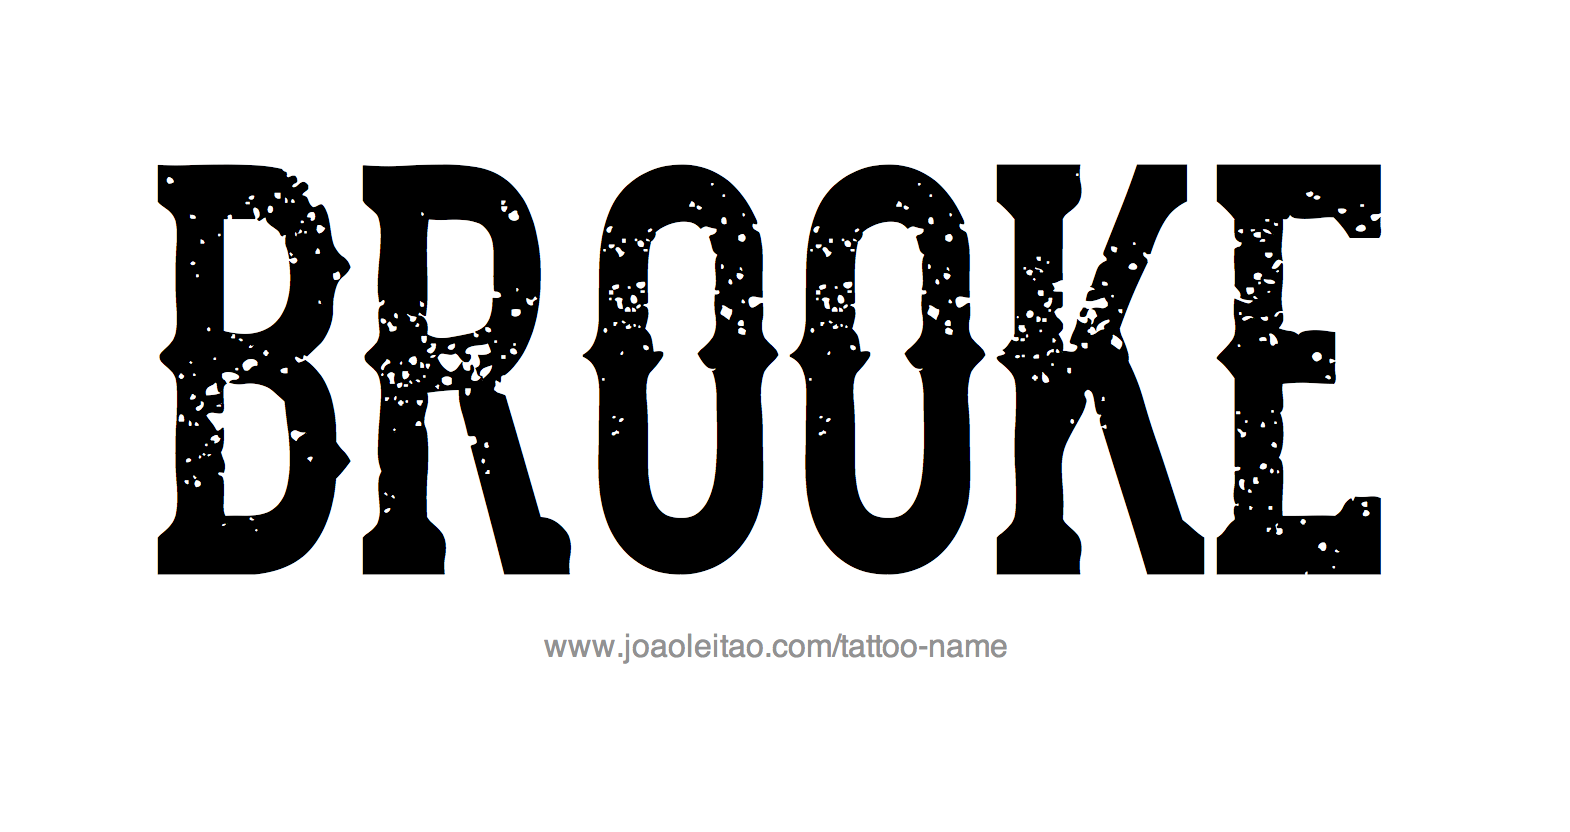 Tattoo Design Name Brooke 